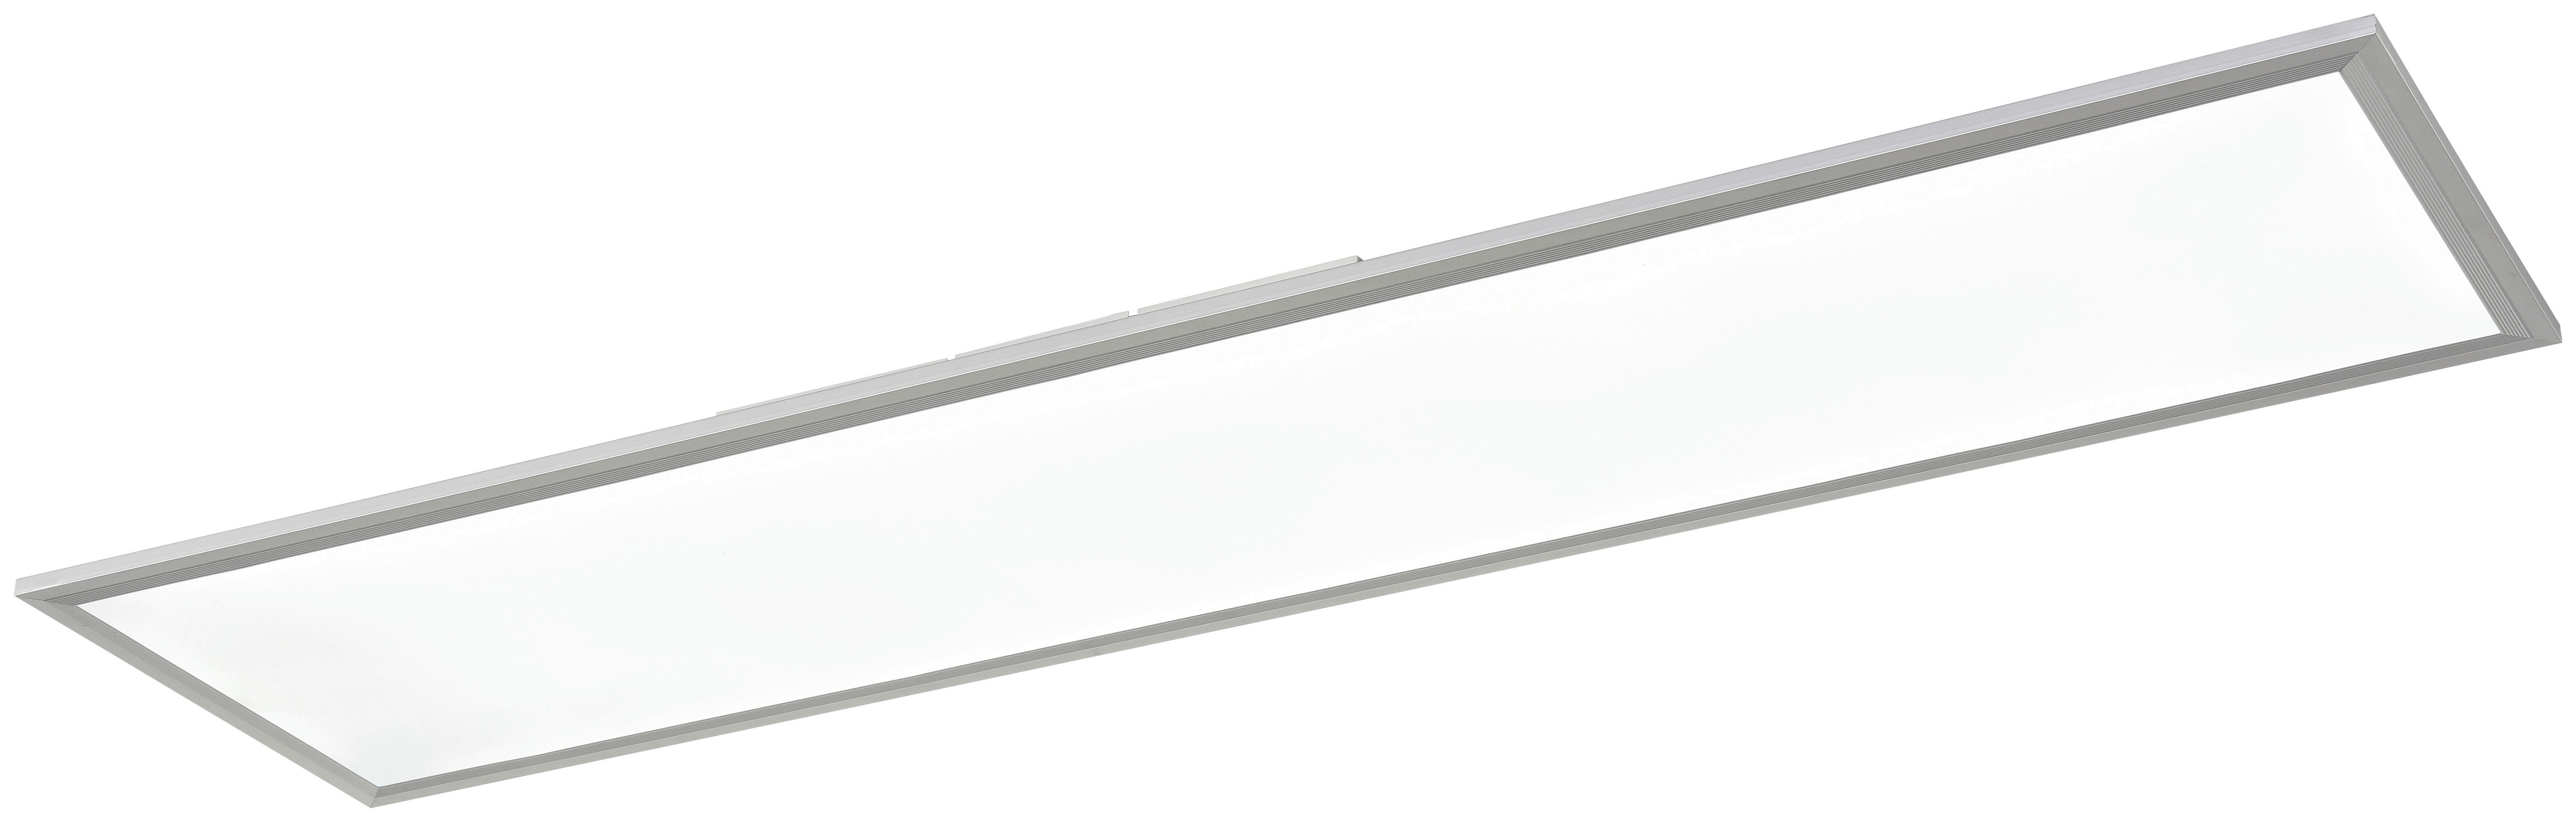 POCOline Deckenpanel Plano weiß silber Kunststoff Aluminium B/H/L: ca. 30x7x120 cm